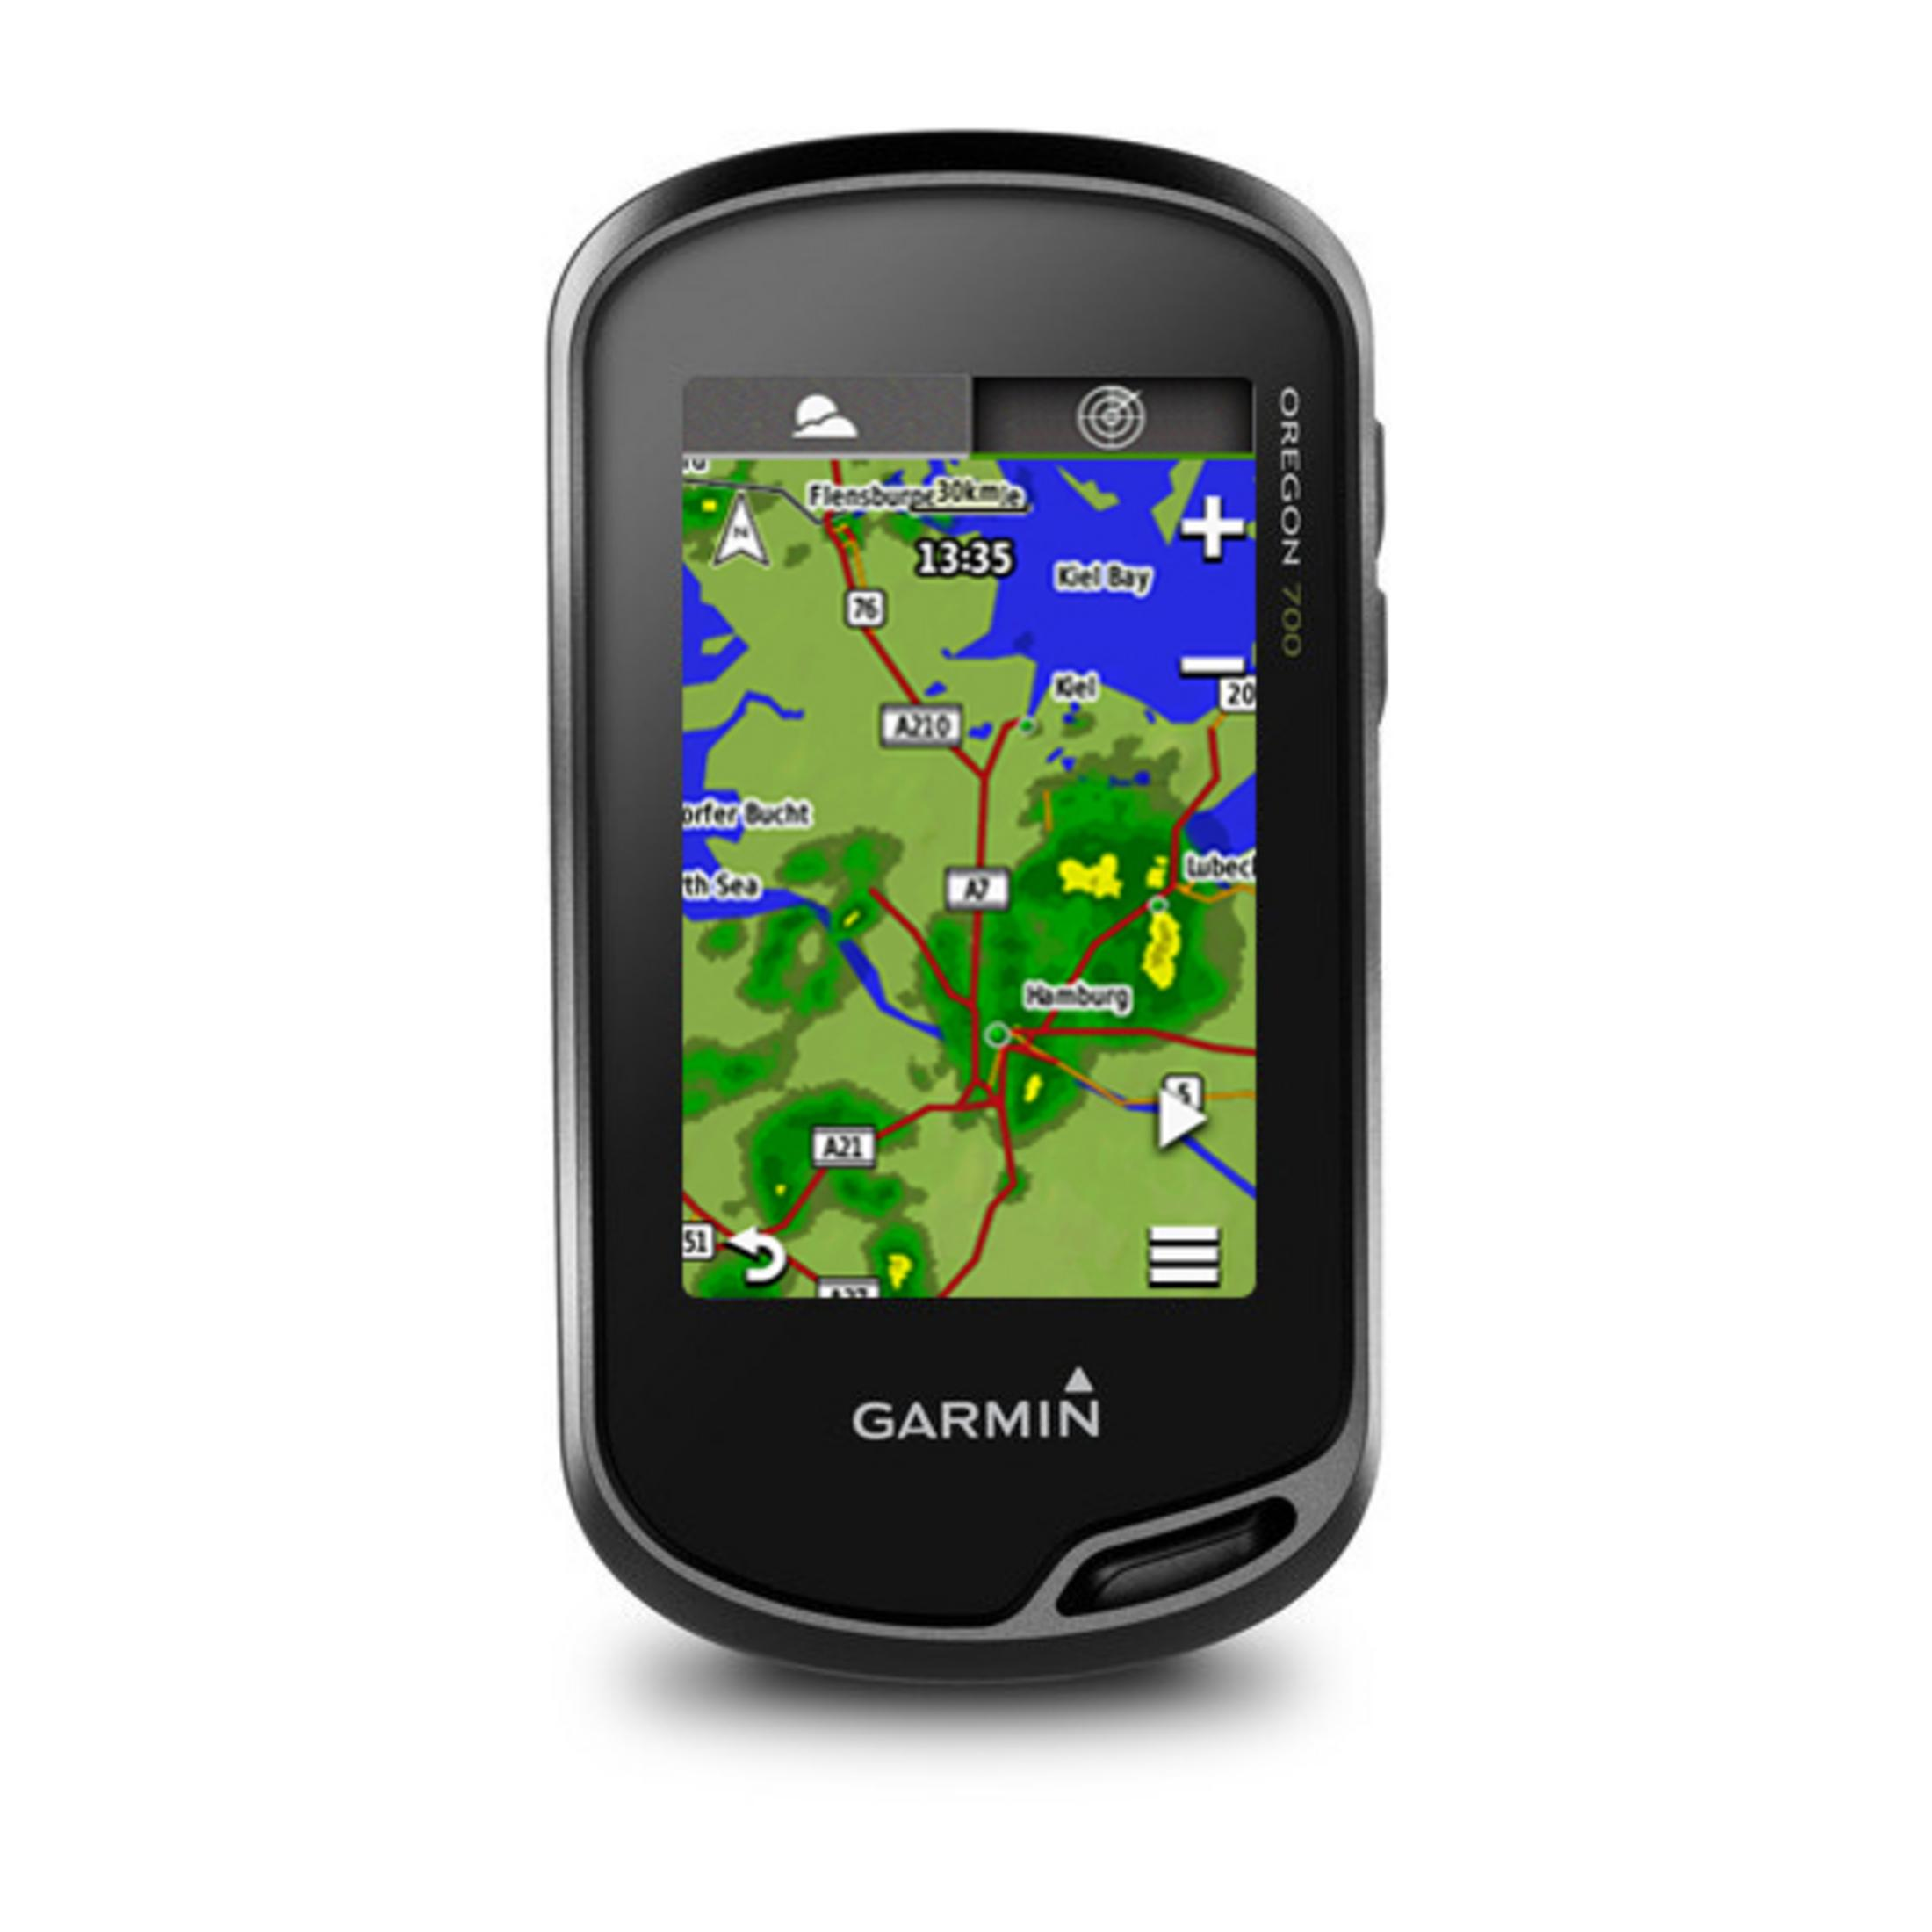 GARMIN OREGON 700 GPS-HANDGERÄT Fahrrad, Sport, Geocaching Outdoor